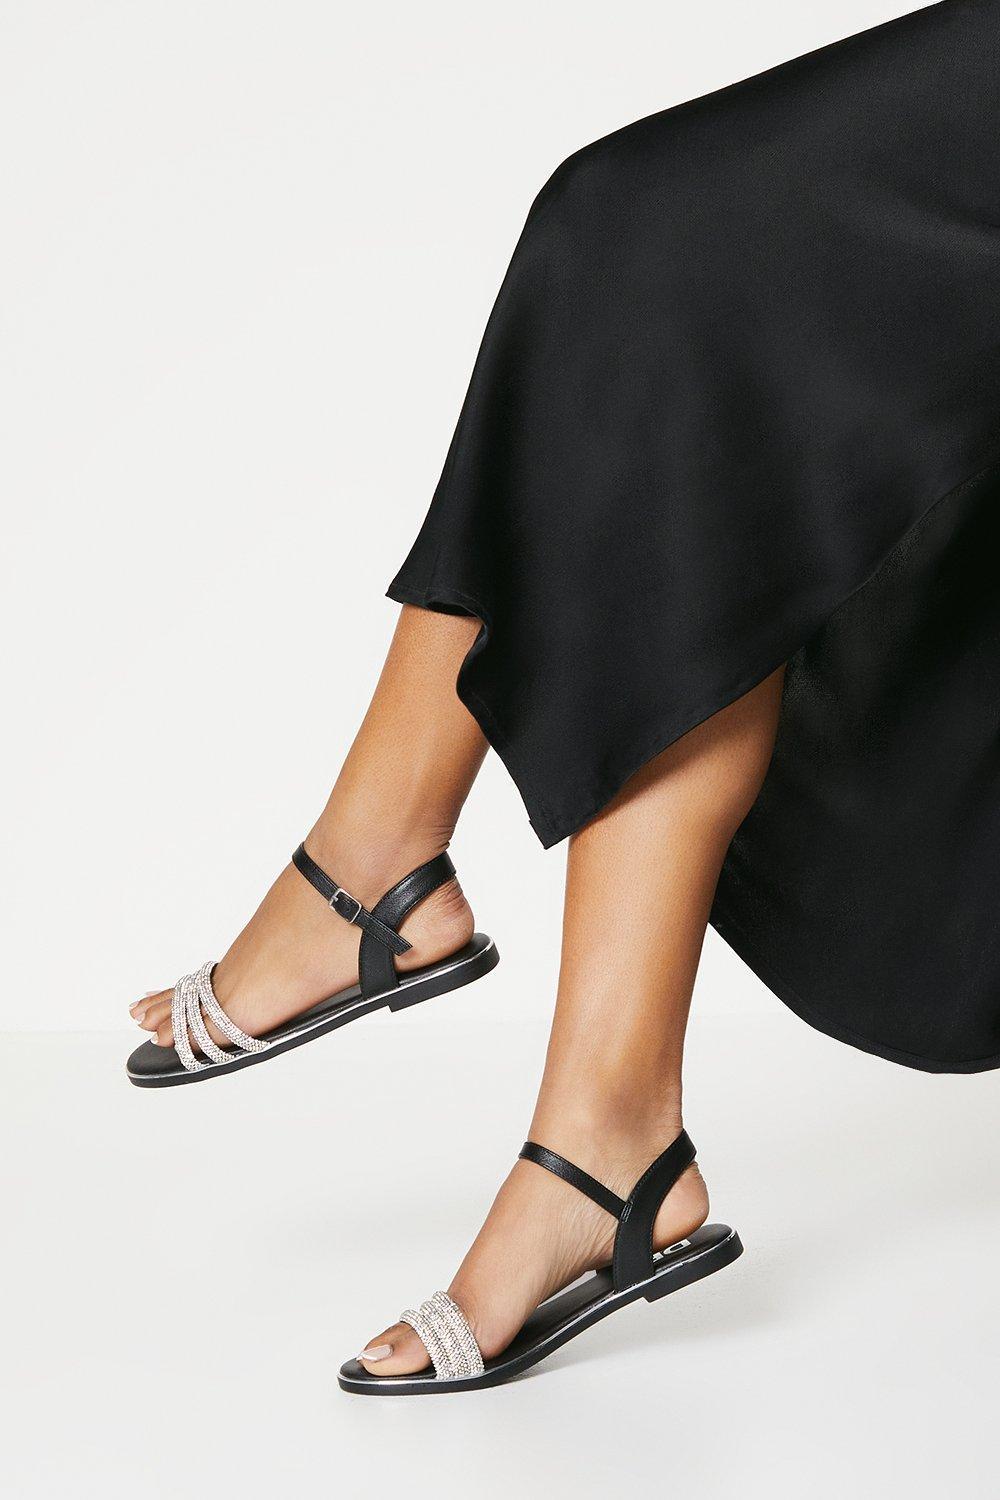 Women's Wide Fit Fern Embellished Flat Sandals - black - 8